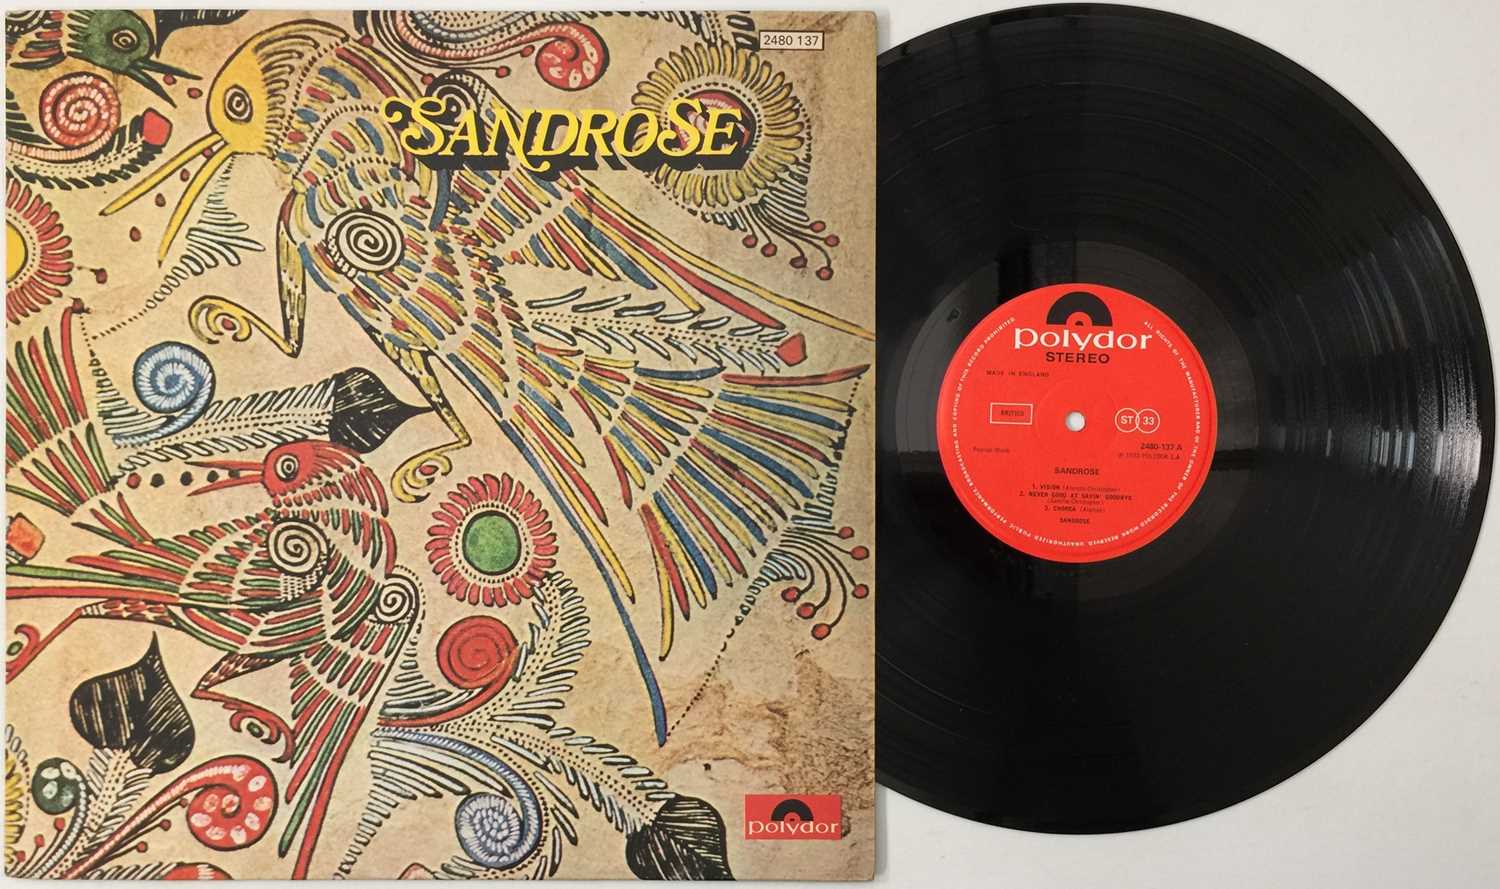 Lot 156 - SANDROSE - SANDROSE LP (UK POLYDOR - 2480 137)